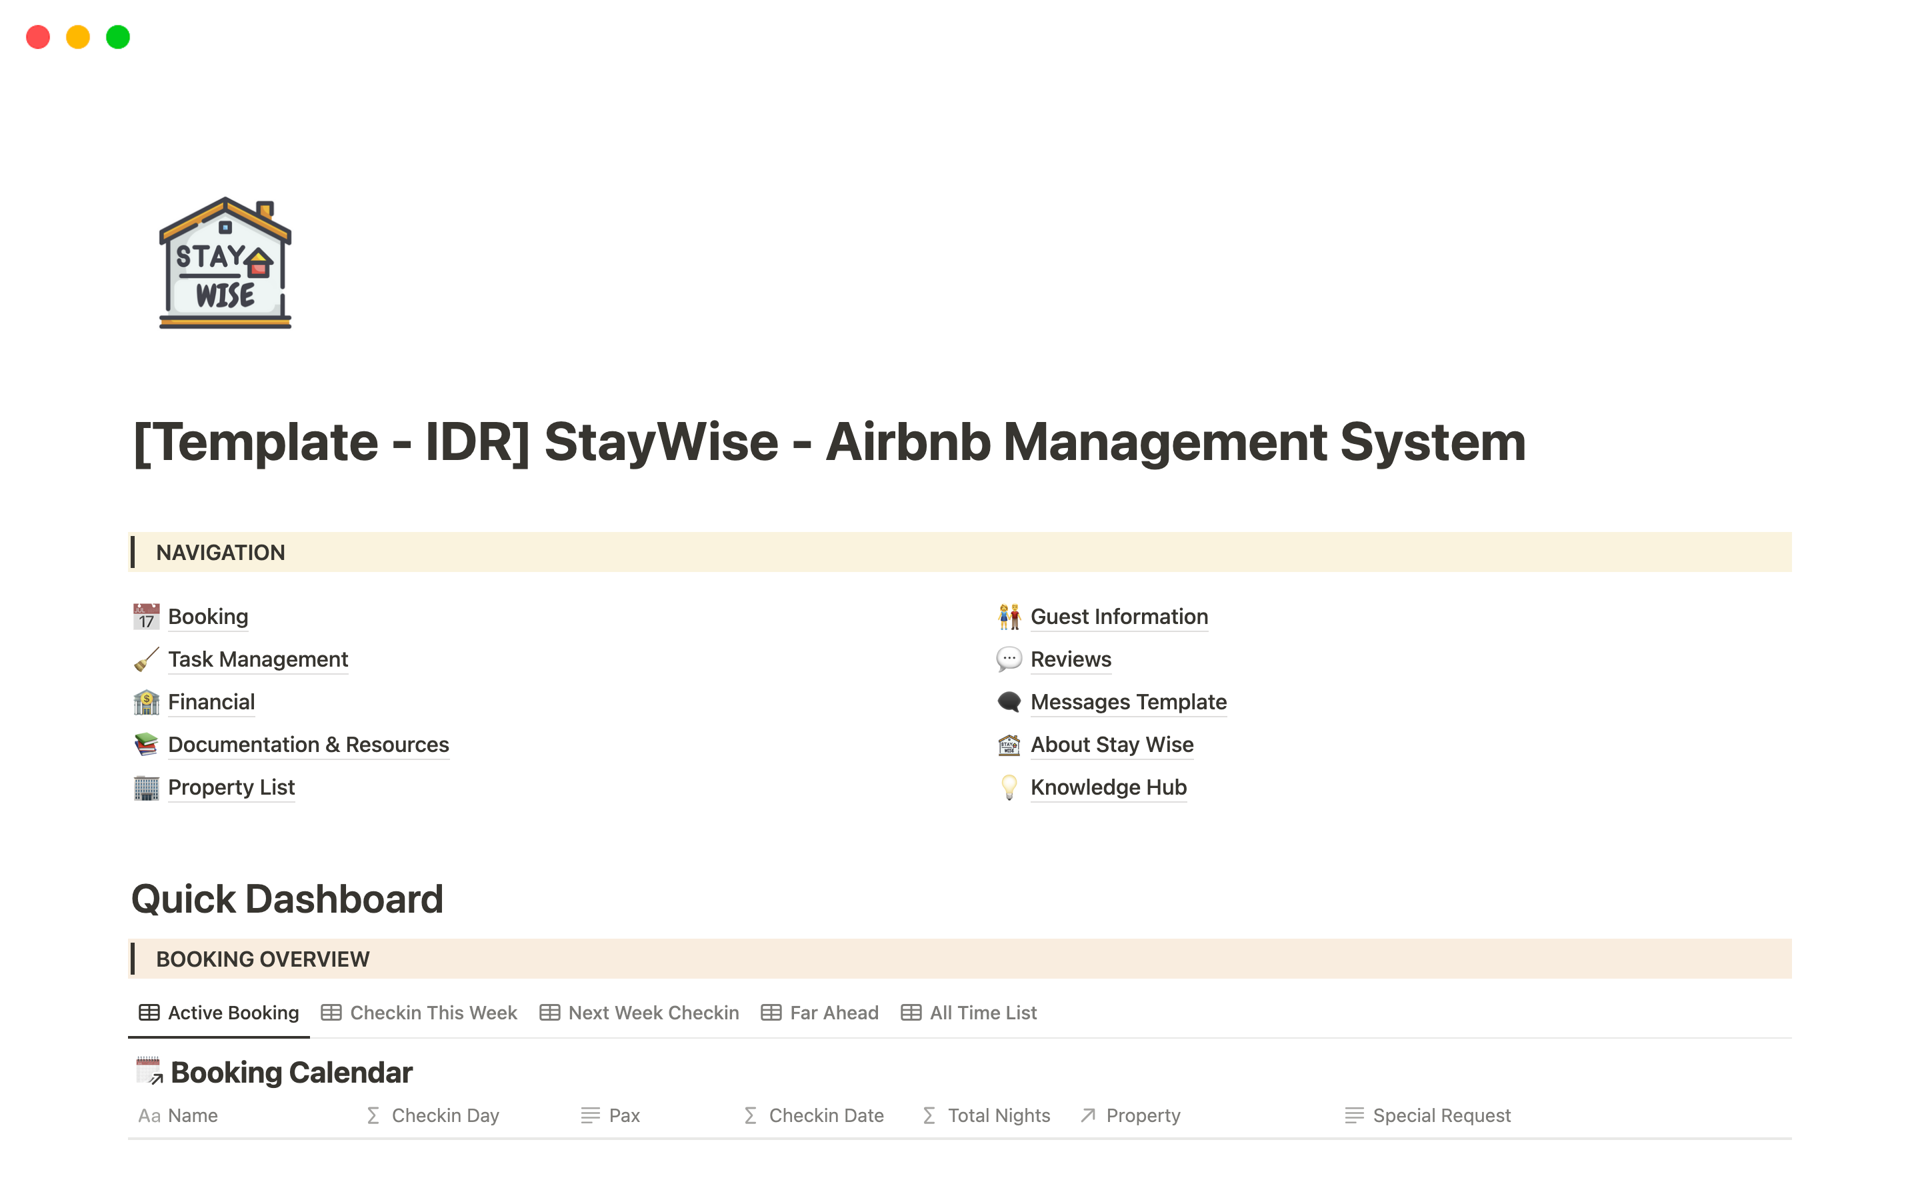 StayWise IDR - Airbnb Management System님의 템플릿 미리보기